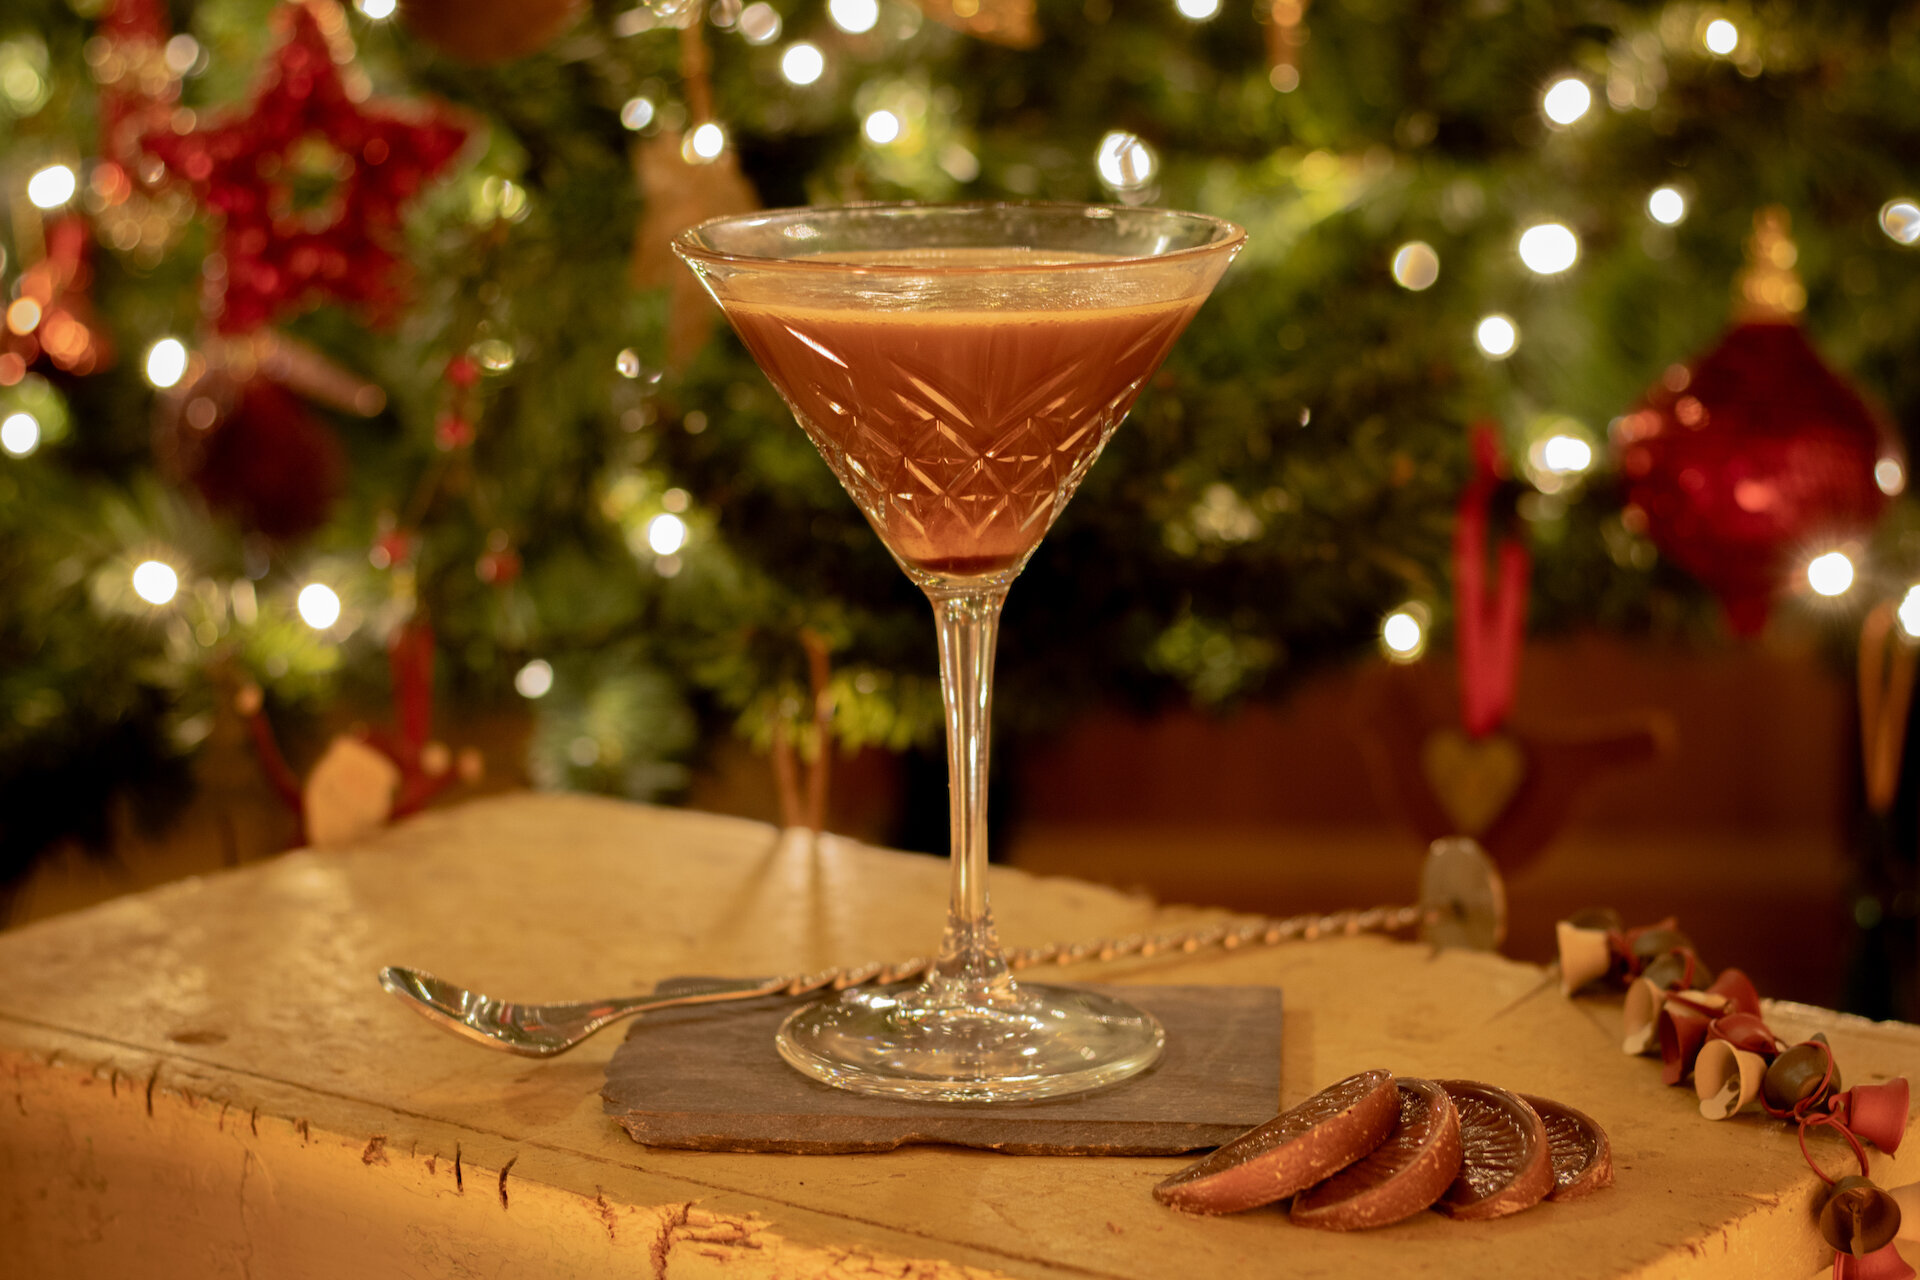 Enjoy some festive spirit with a chocolate orange espresso martini.